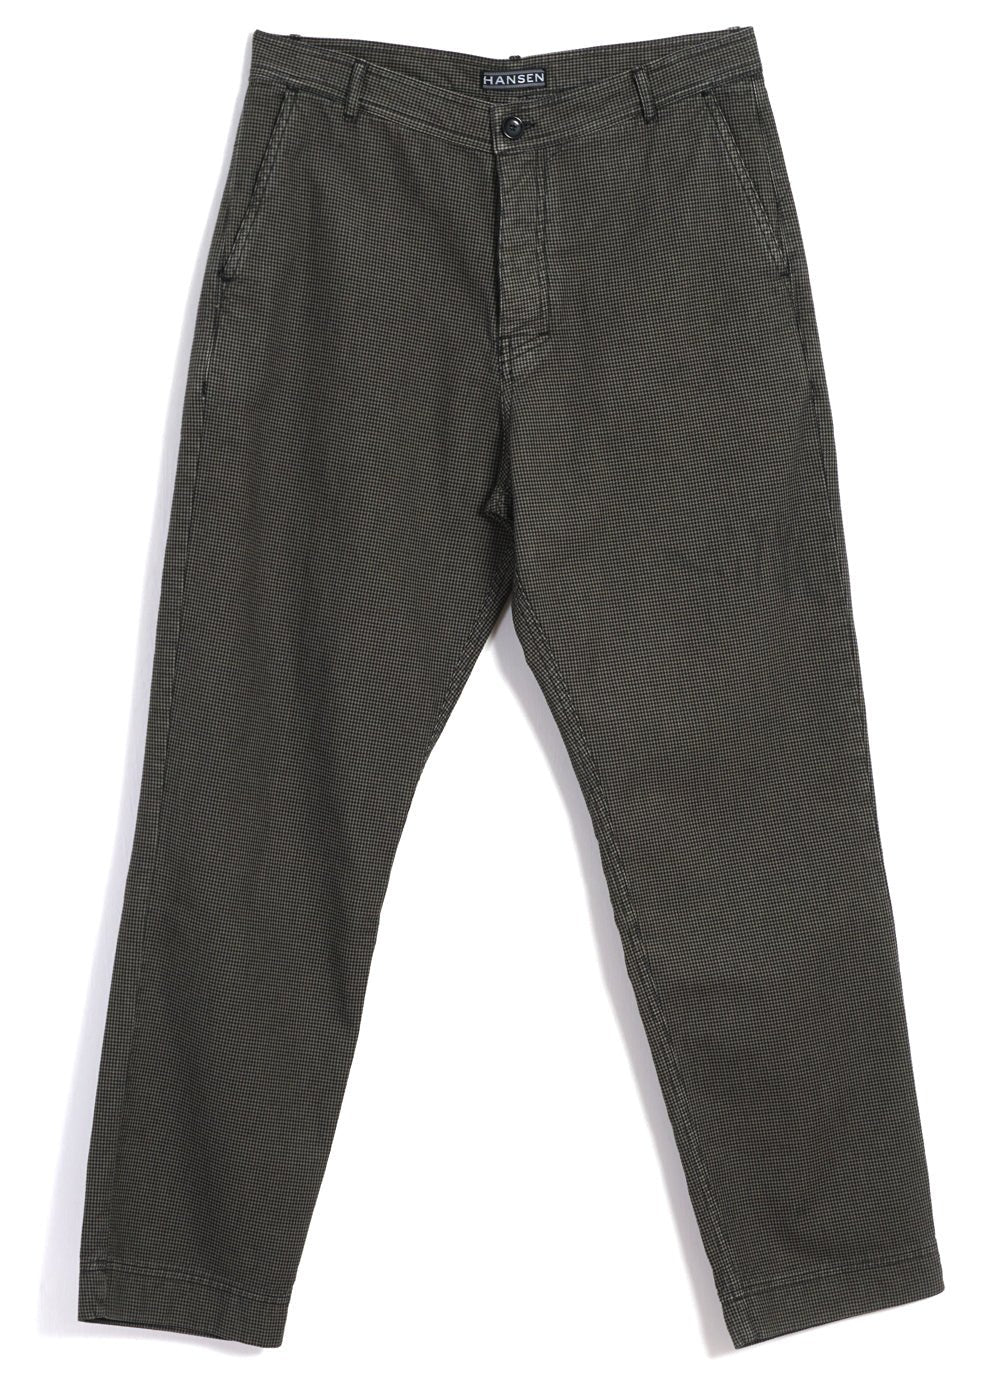 HANSEN GARMENTS - KEN | Wide Cut Work Trousers | Black Sand - HANSEN Garments